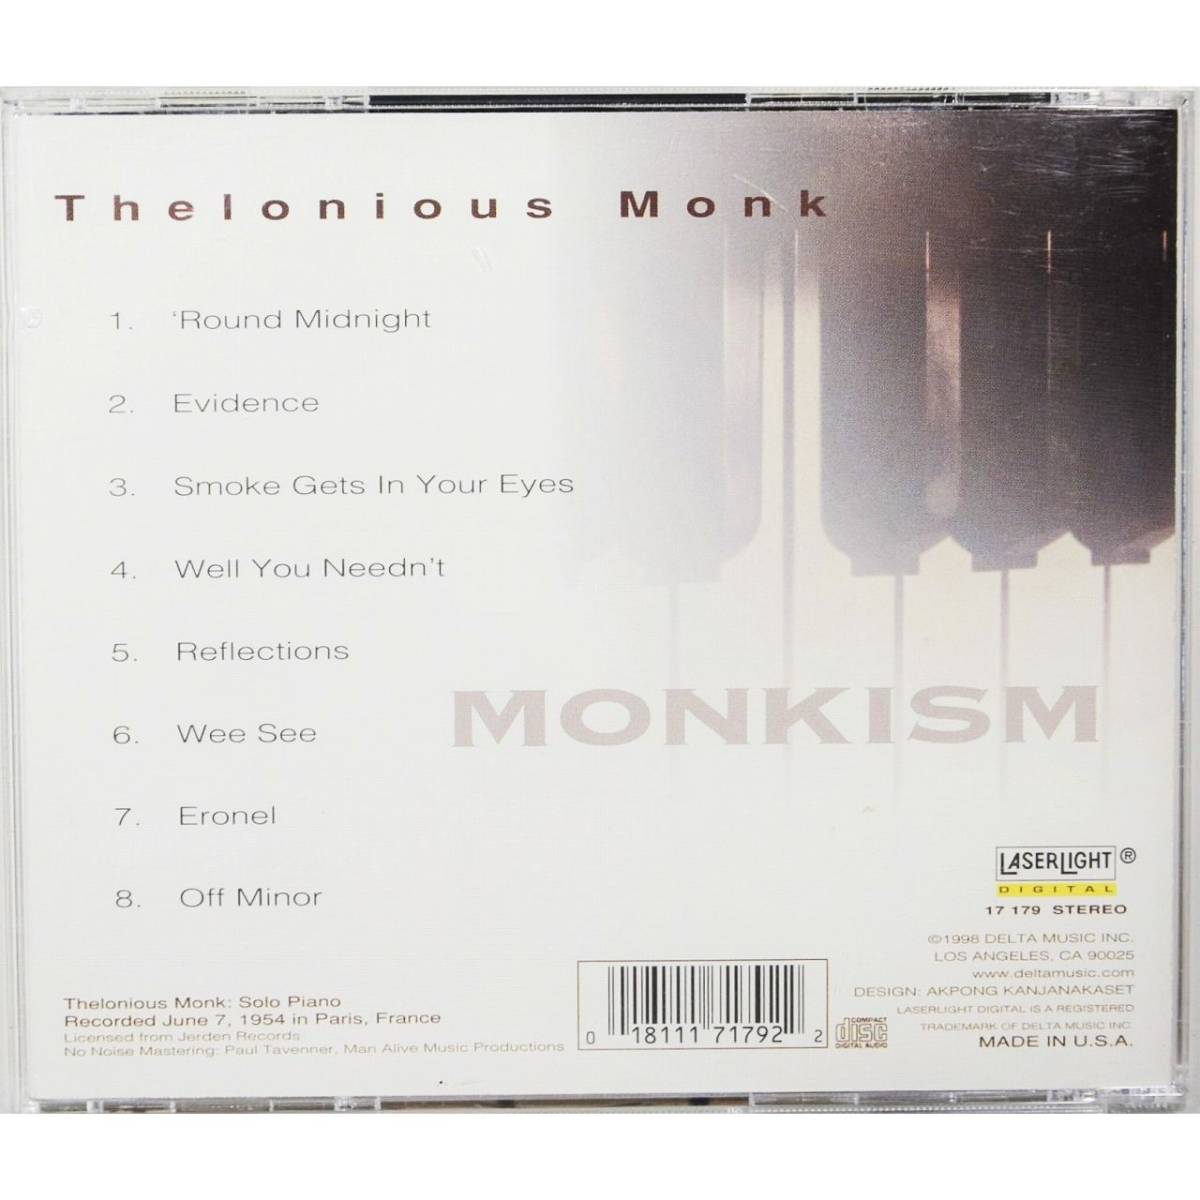 Thelonious Monk / Monkism ◇ セロニアス・モンク / モンクイズム ◇ 史上最高の鬼才ジャズ・ピアニスト ◇_画像4